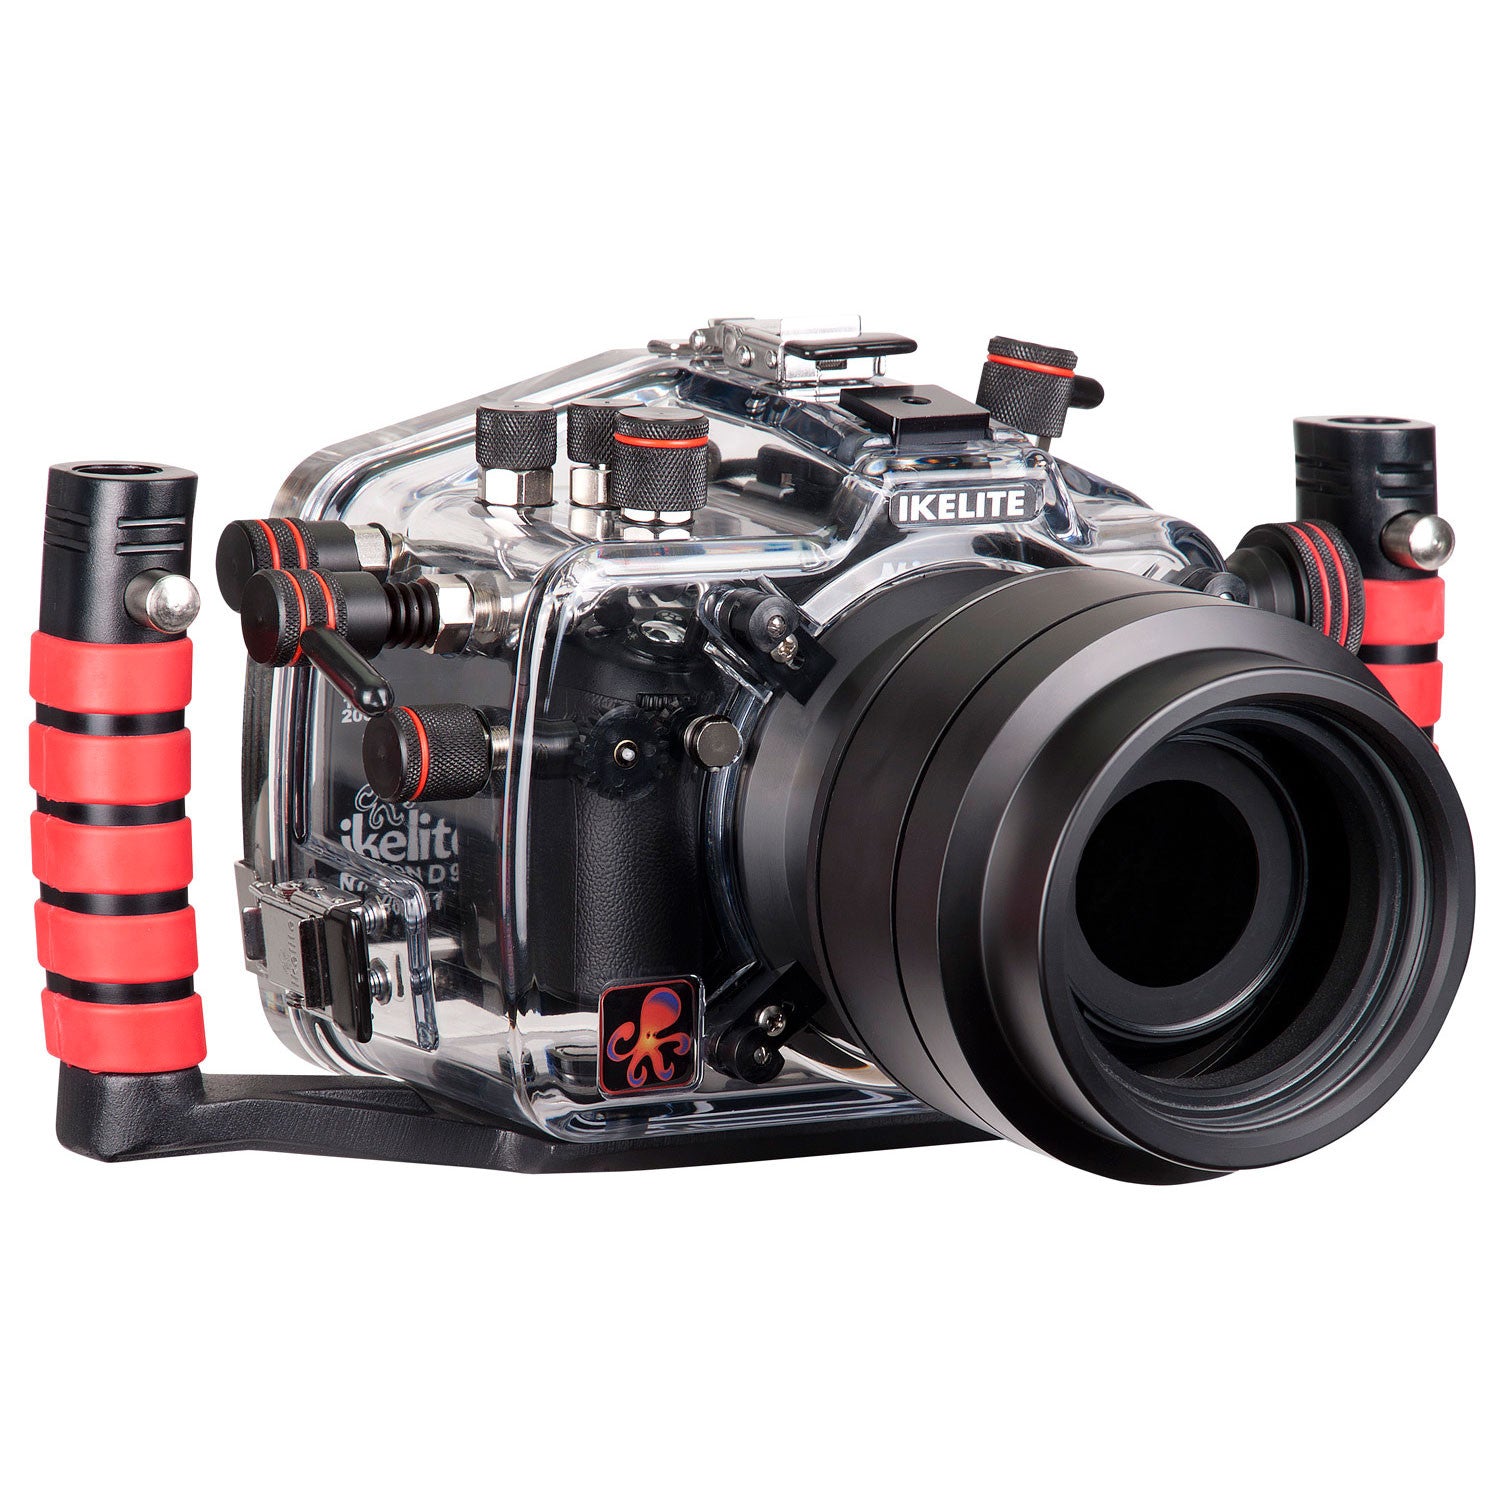 200FL Underwater TTL Housing for Nikon D90 DSLR Cameras